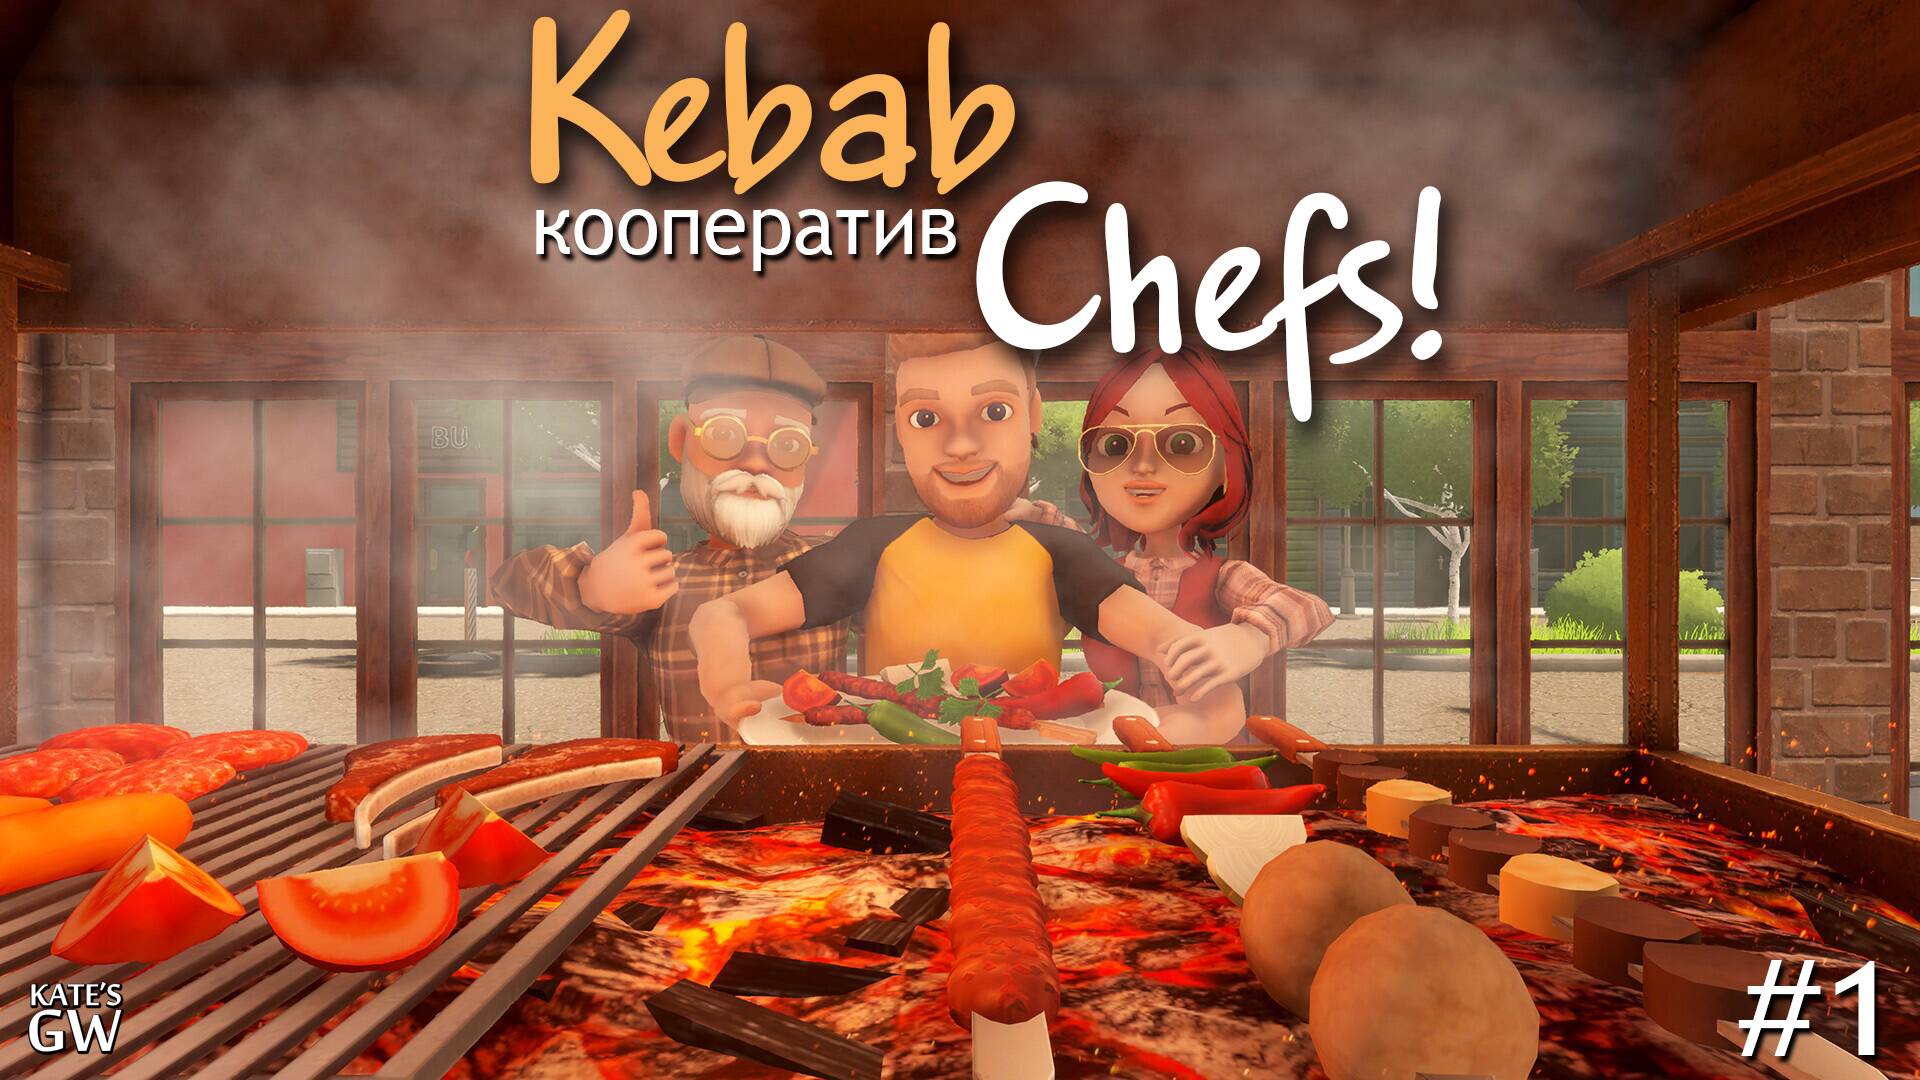 Kebab Chefs! - Restaurant Simulator - кооператив